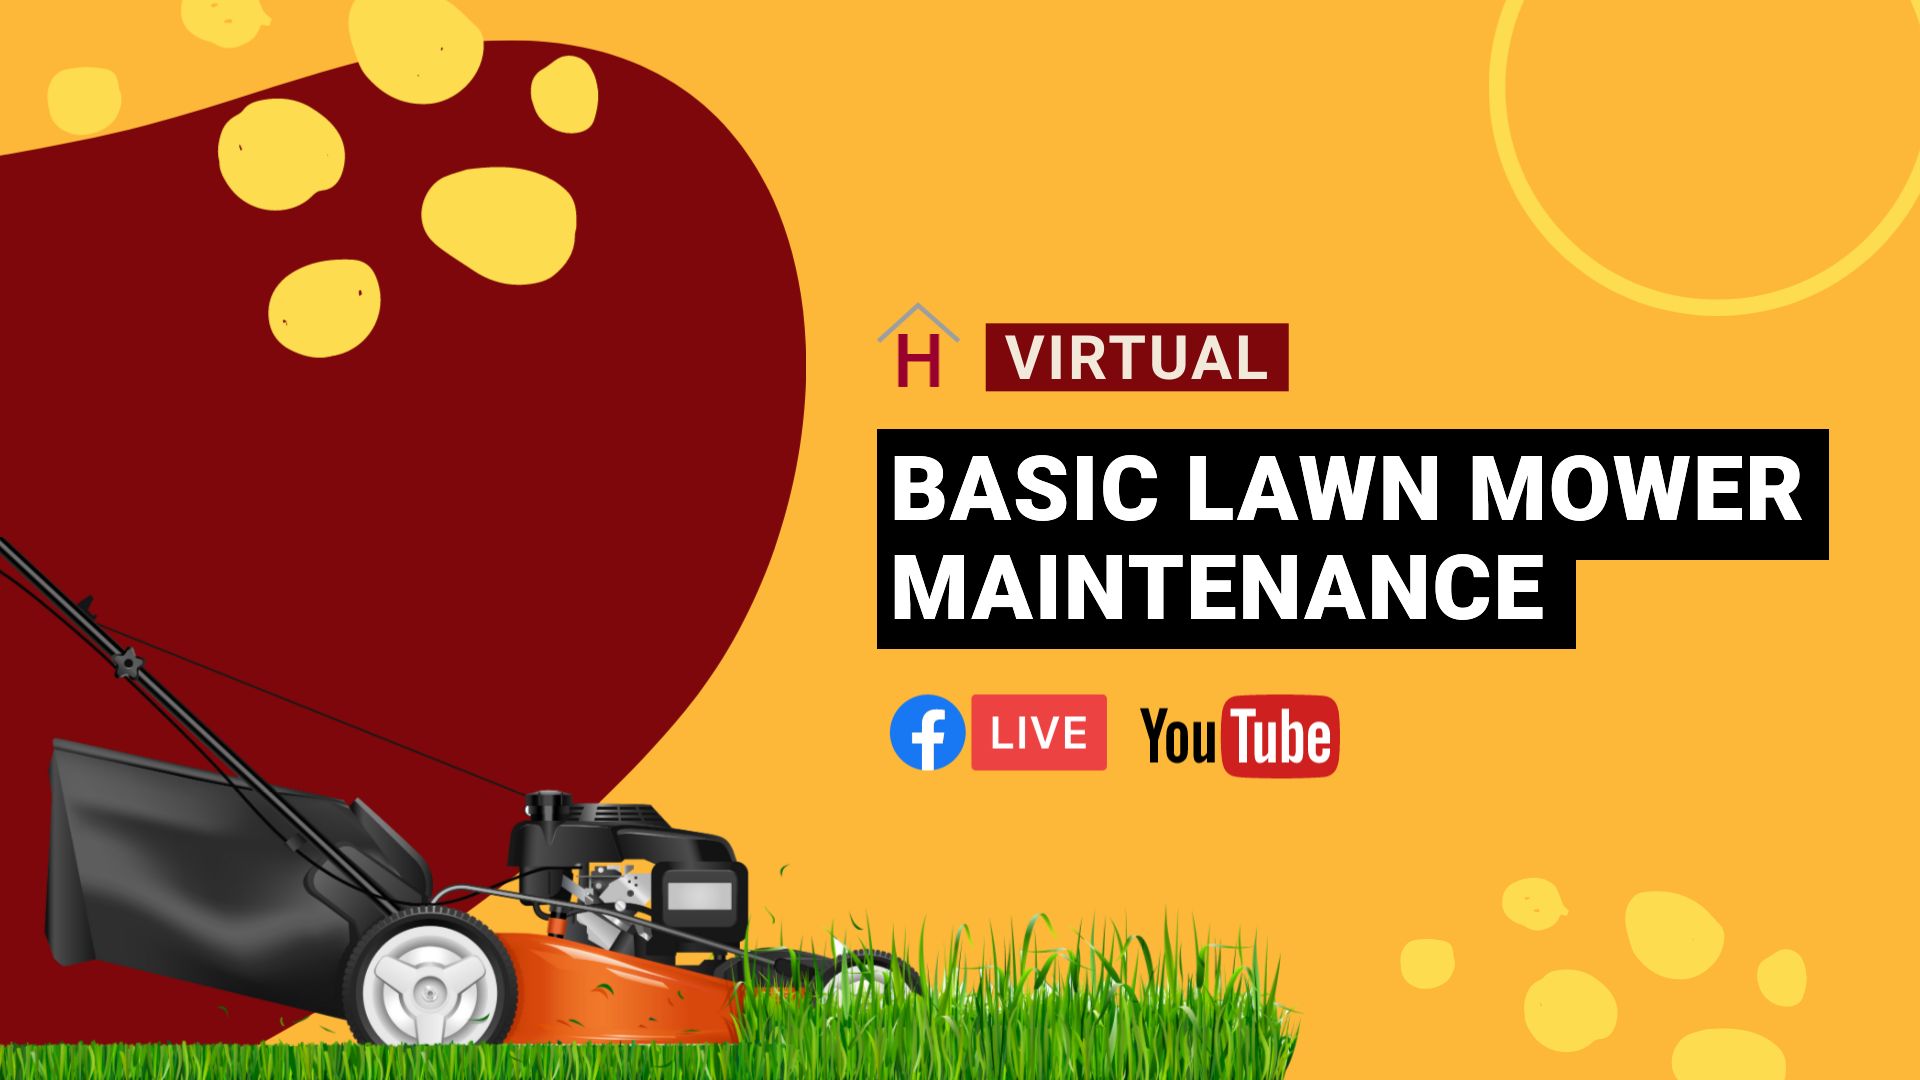 Lawn mower maintenance title screen